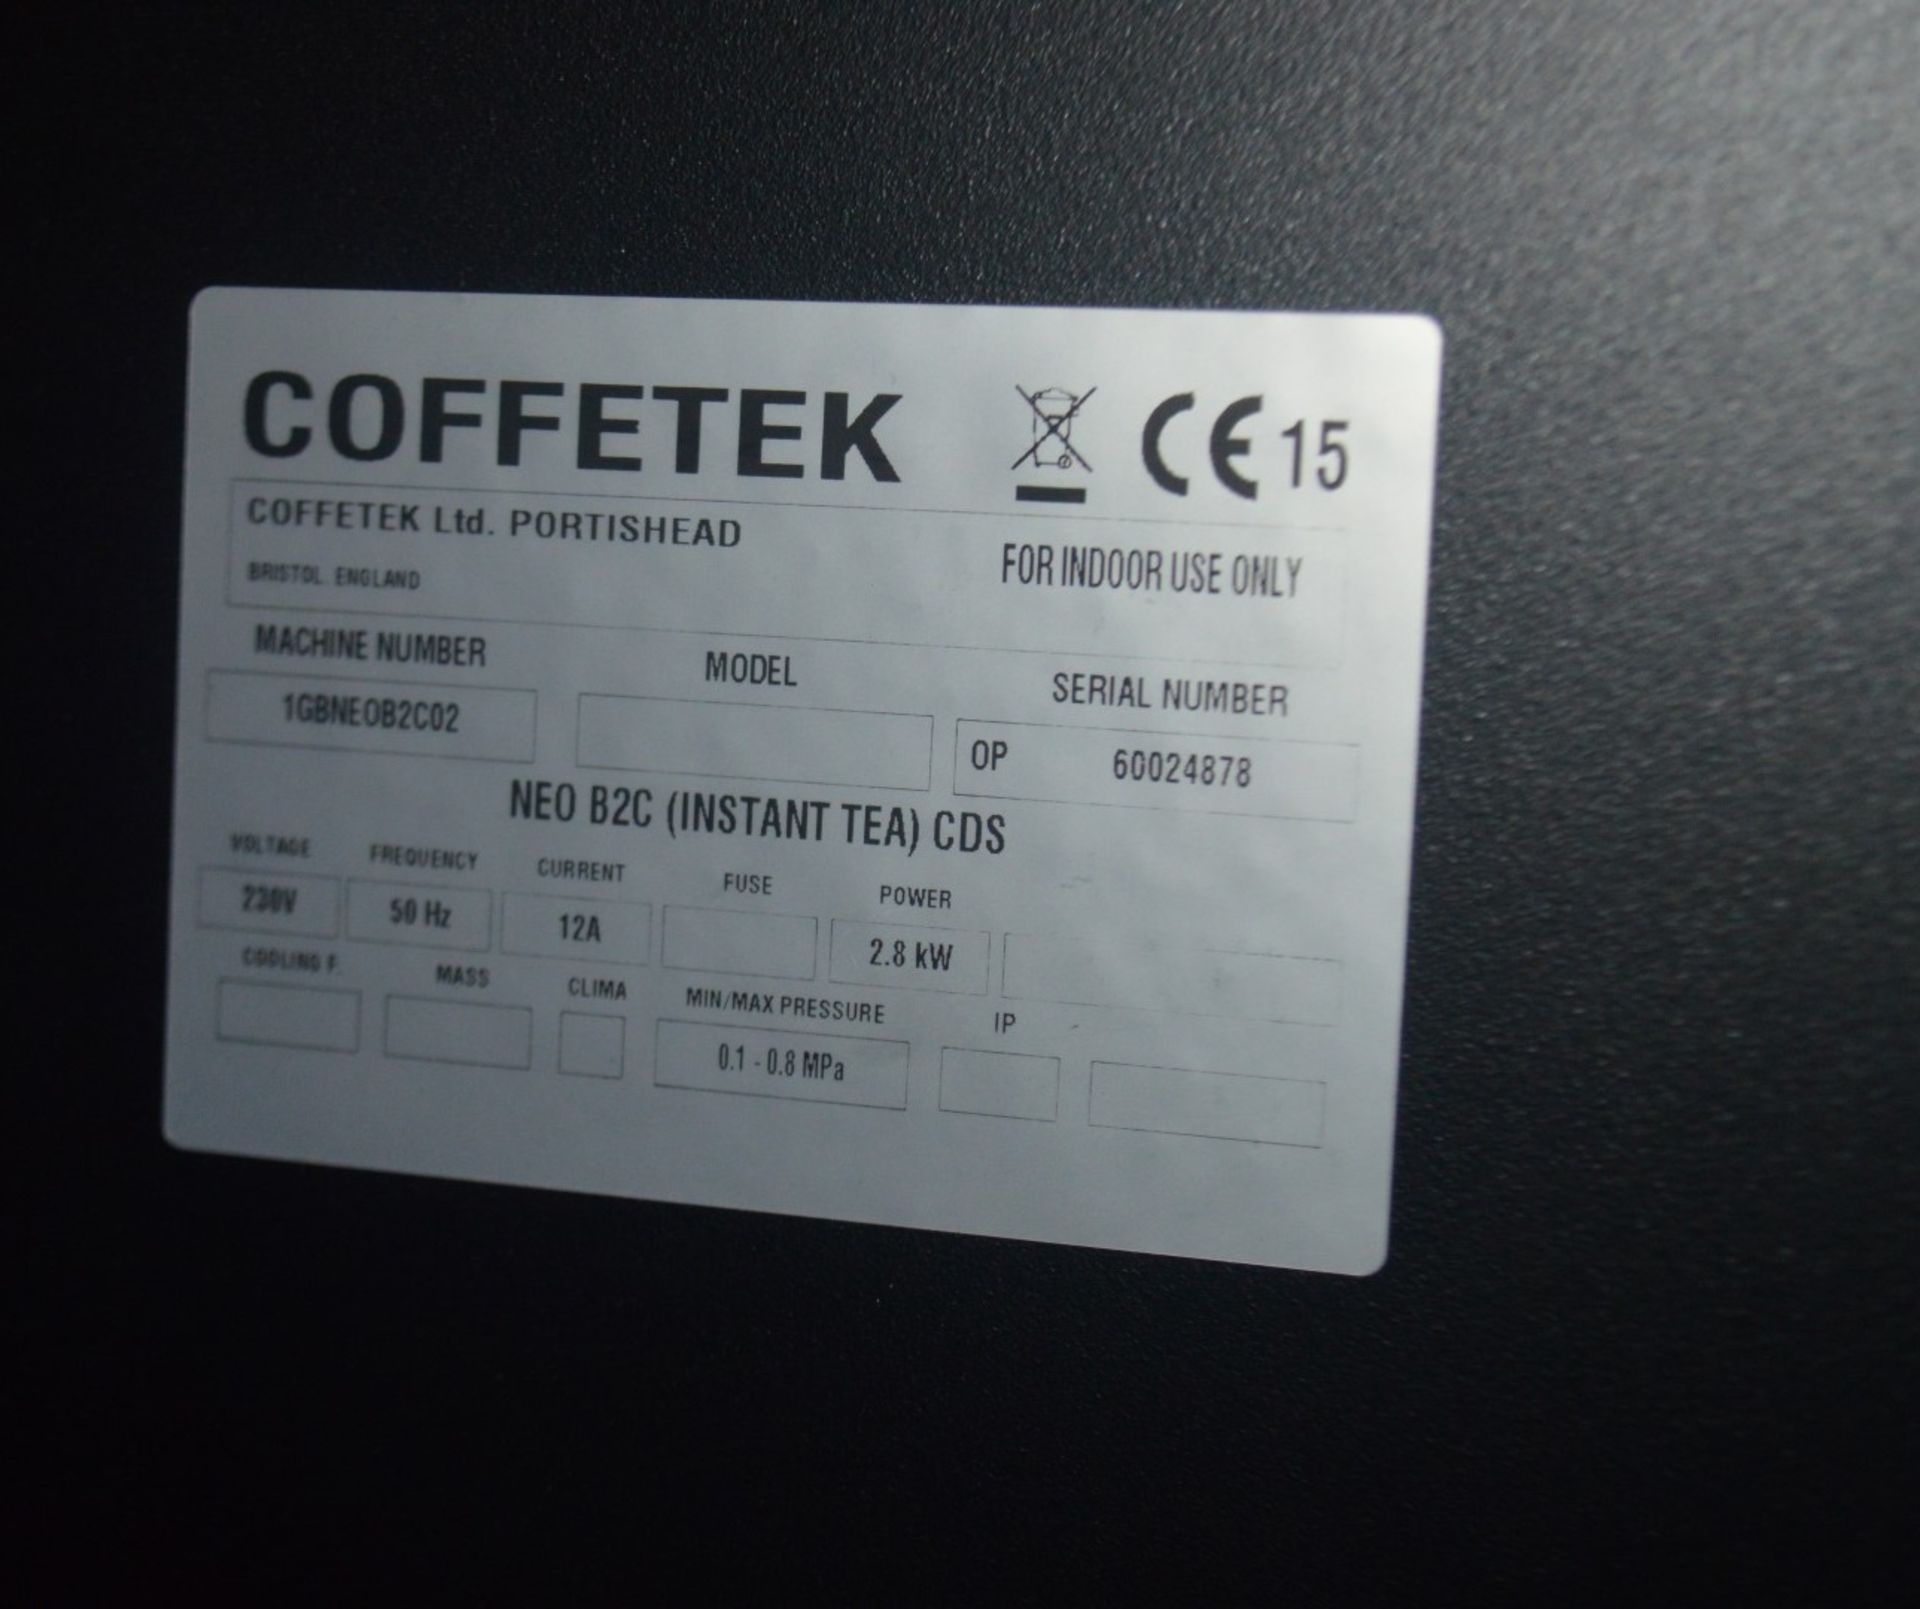 1 x COFFEETEK Touch Screen Instant Hot Drink Vending Machine - Model: Neo B2C (INSTANT TEA) - Image 8 of 9